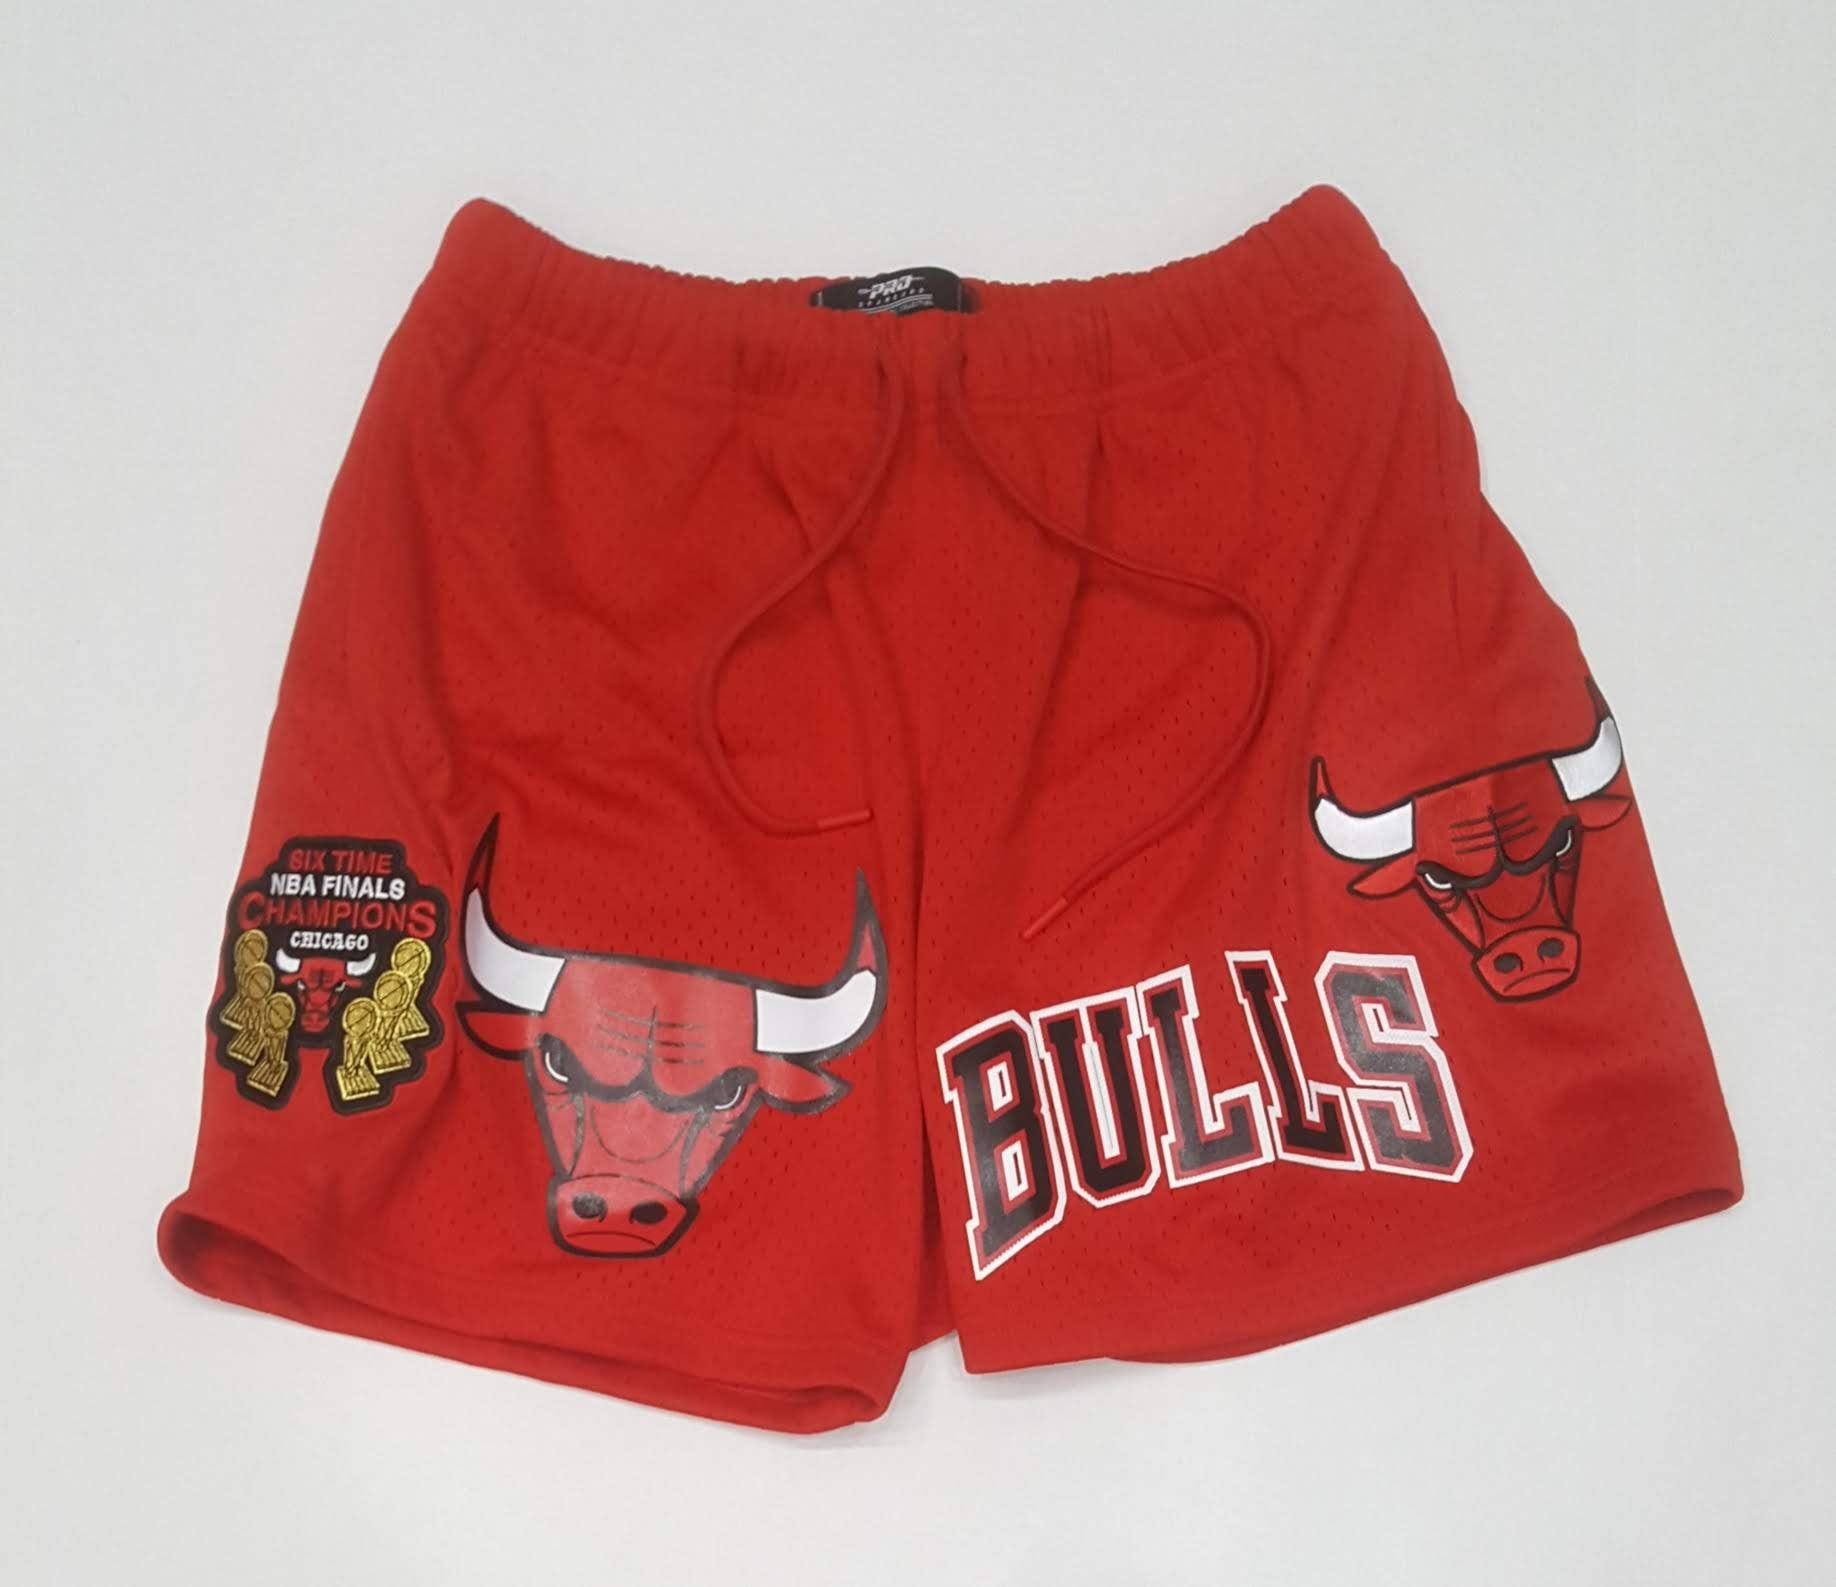 Pro Standard Chicago Bulls Logo Pro Team Mesh Shorts Black